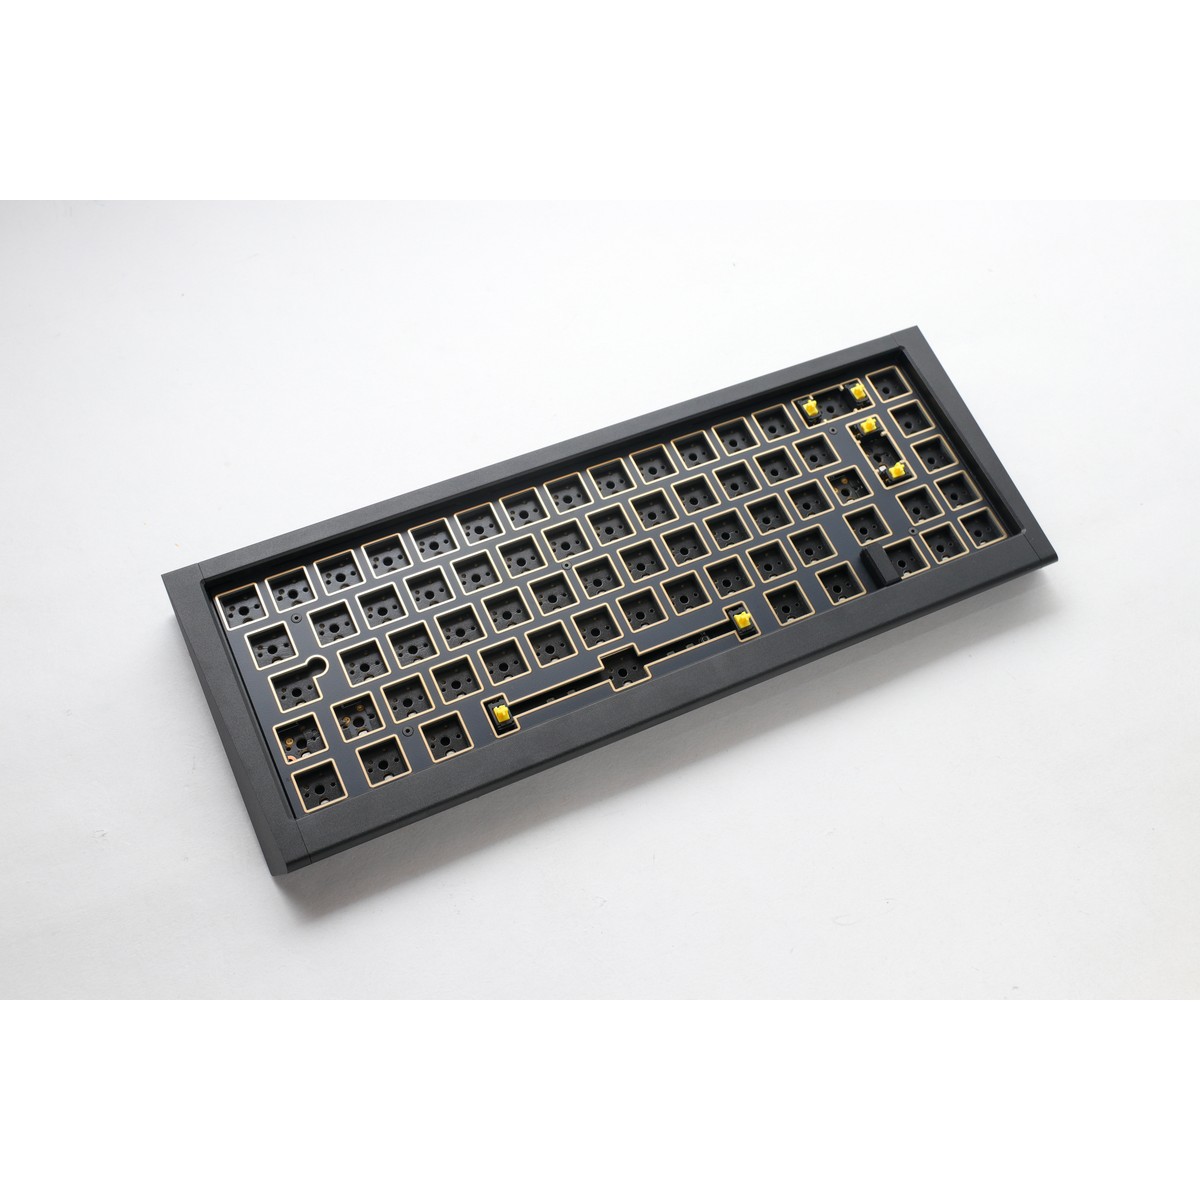 Ducky - Ducky ProjectD Outlaw65 Barebone Custom Keyboard - Black (First Edition)